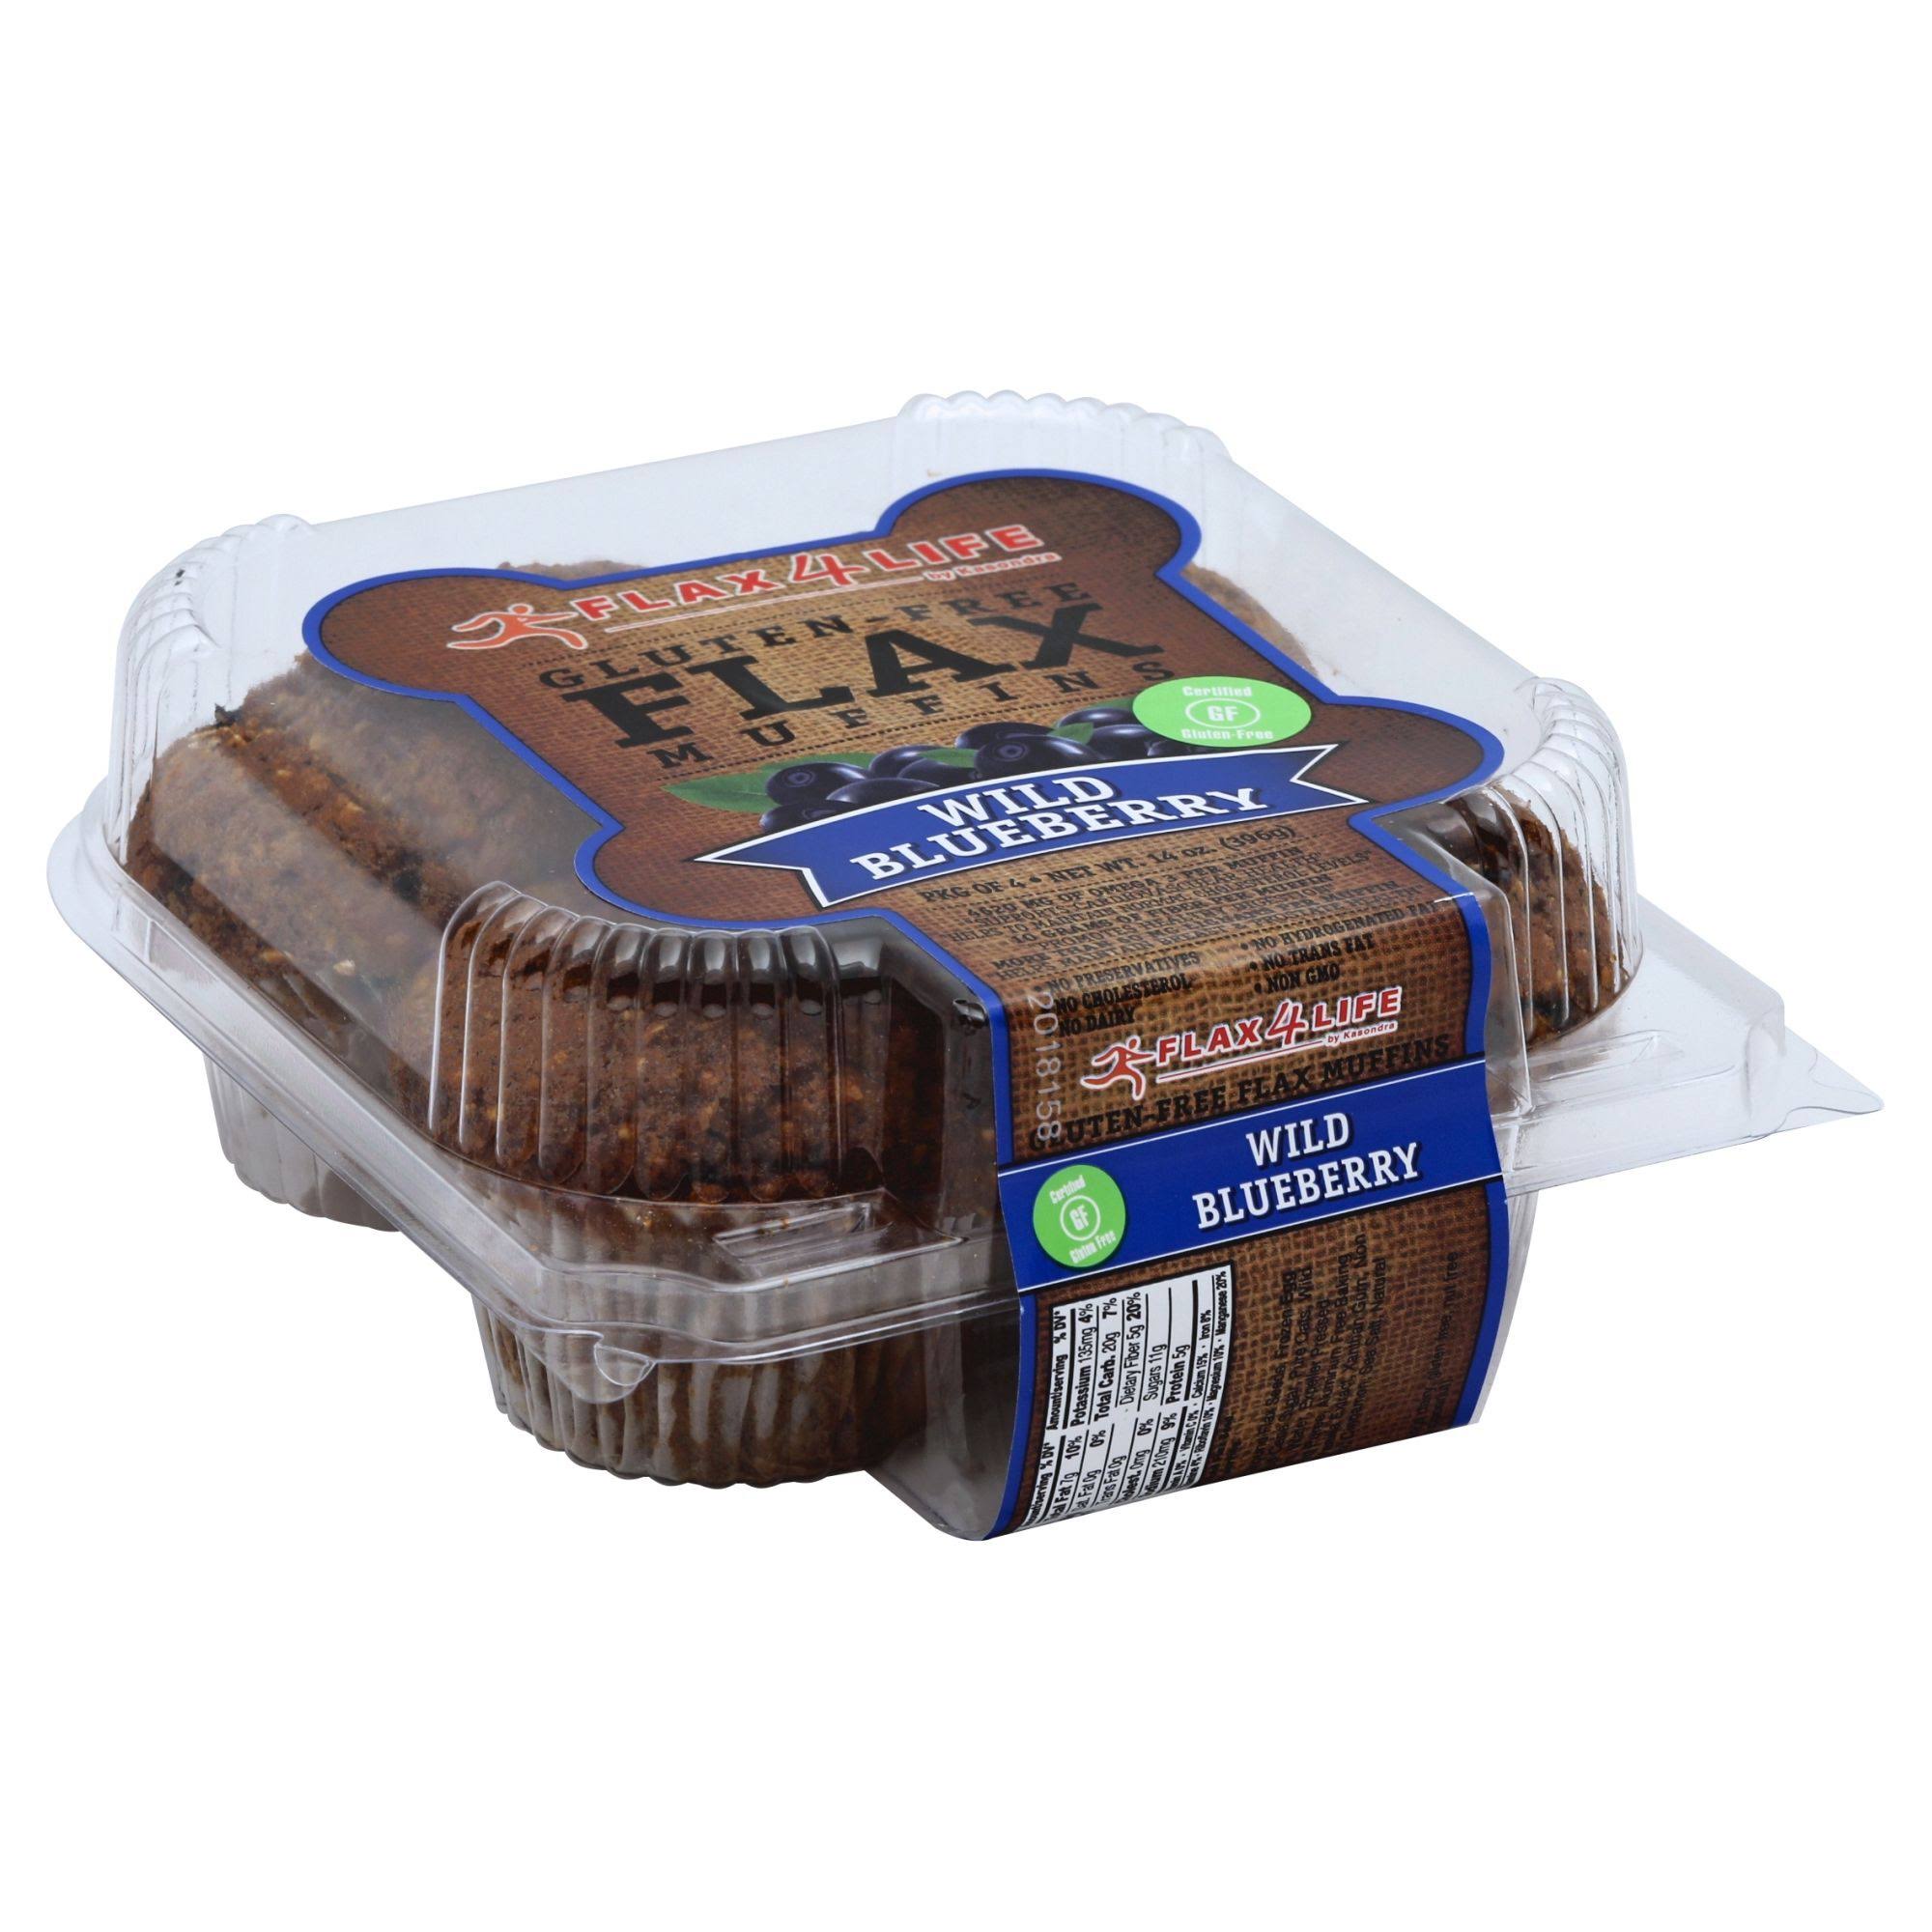 Flax4life: Wild Blueberry Flax Muffins, 14 Oz